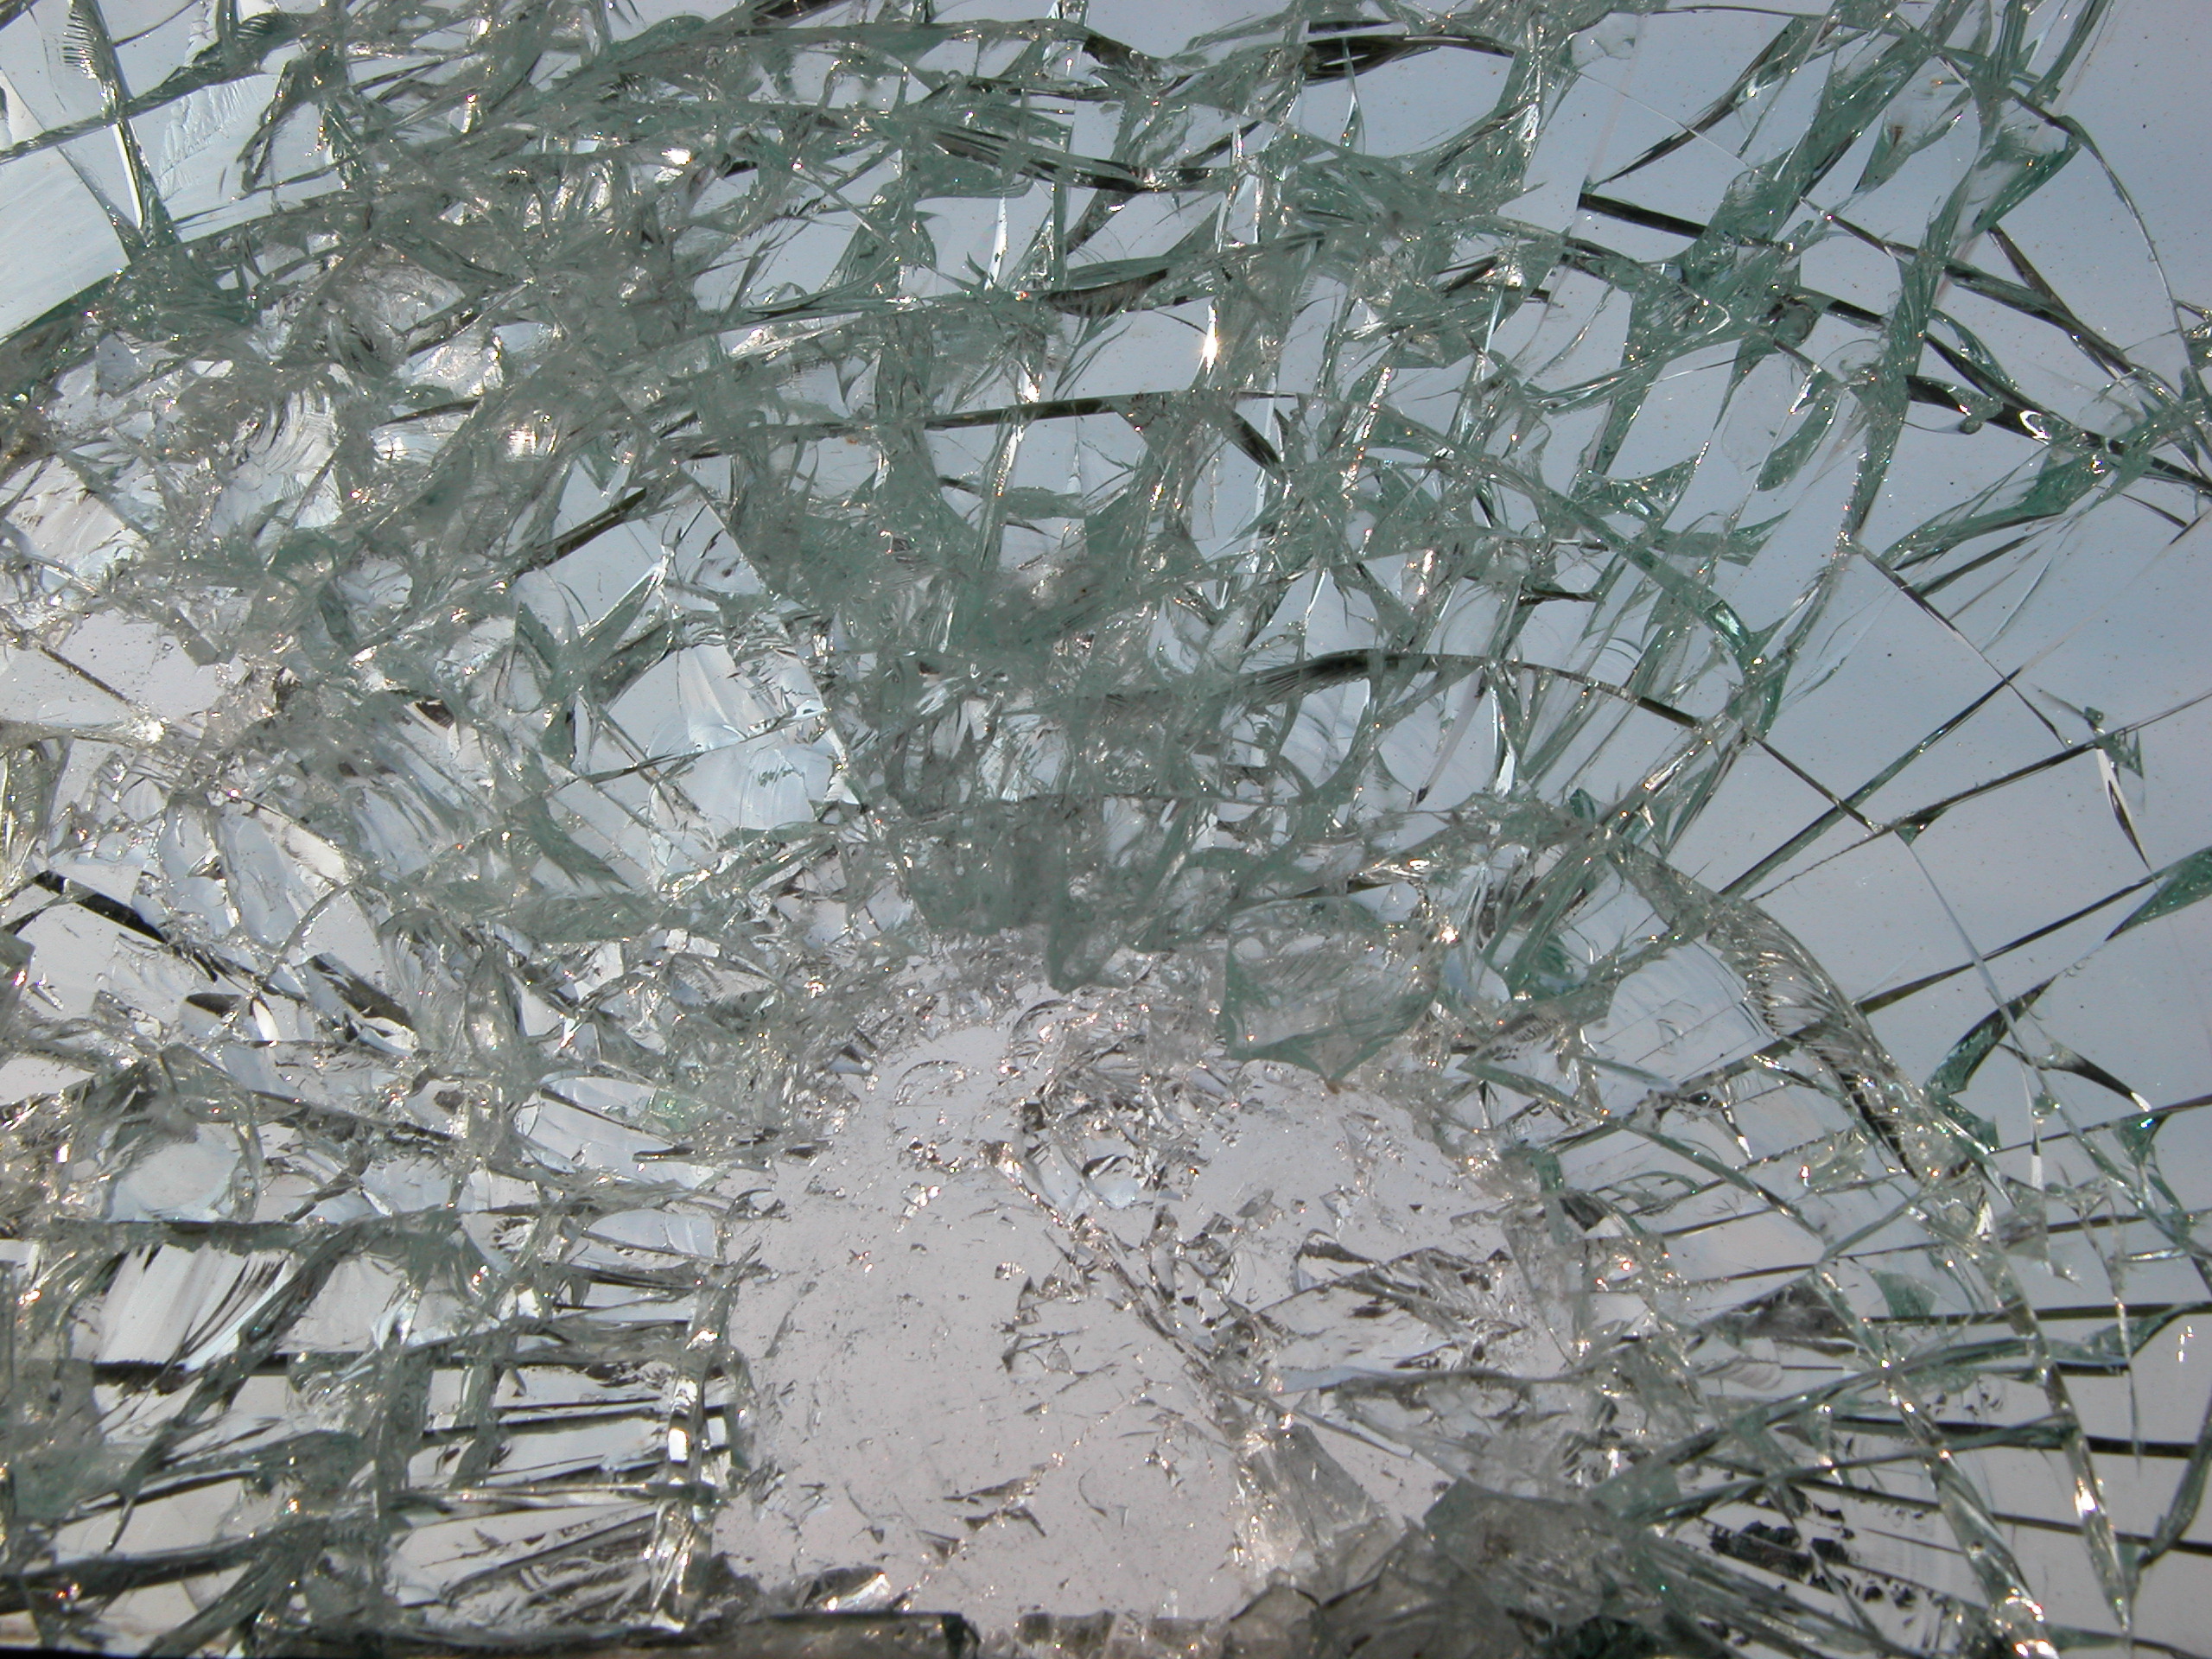 crack in glass window pane star impact